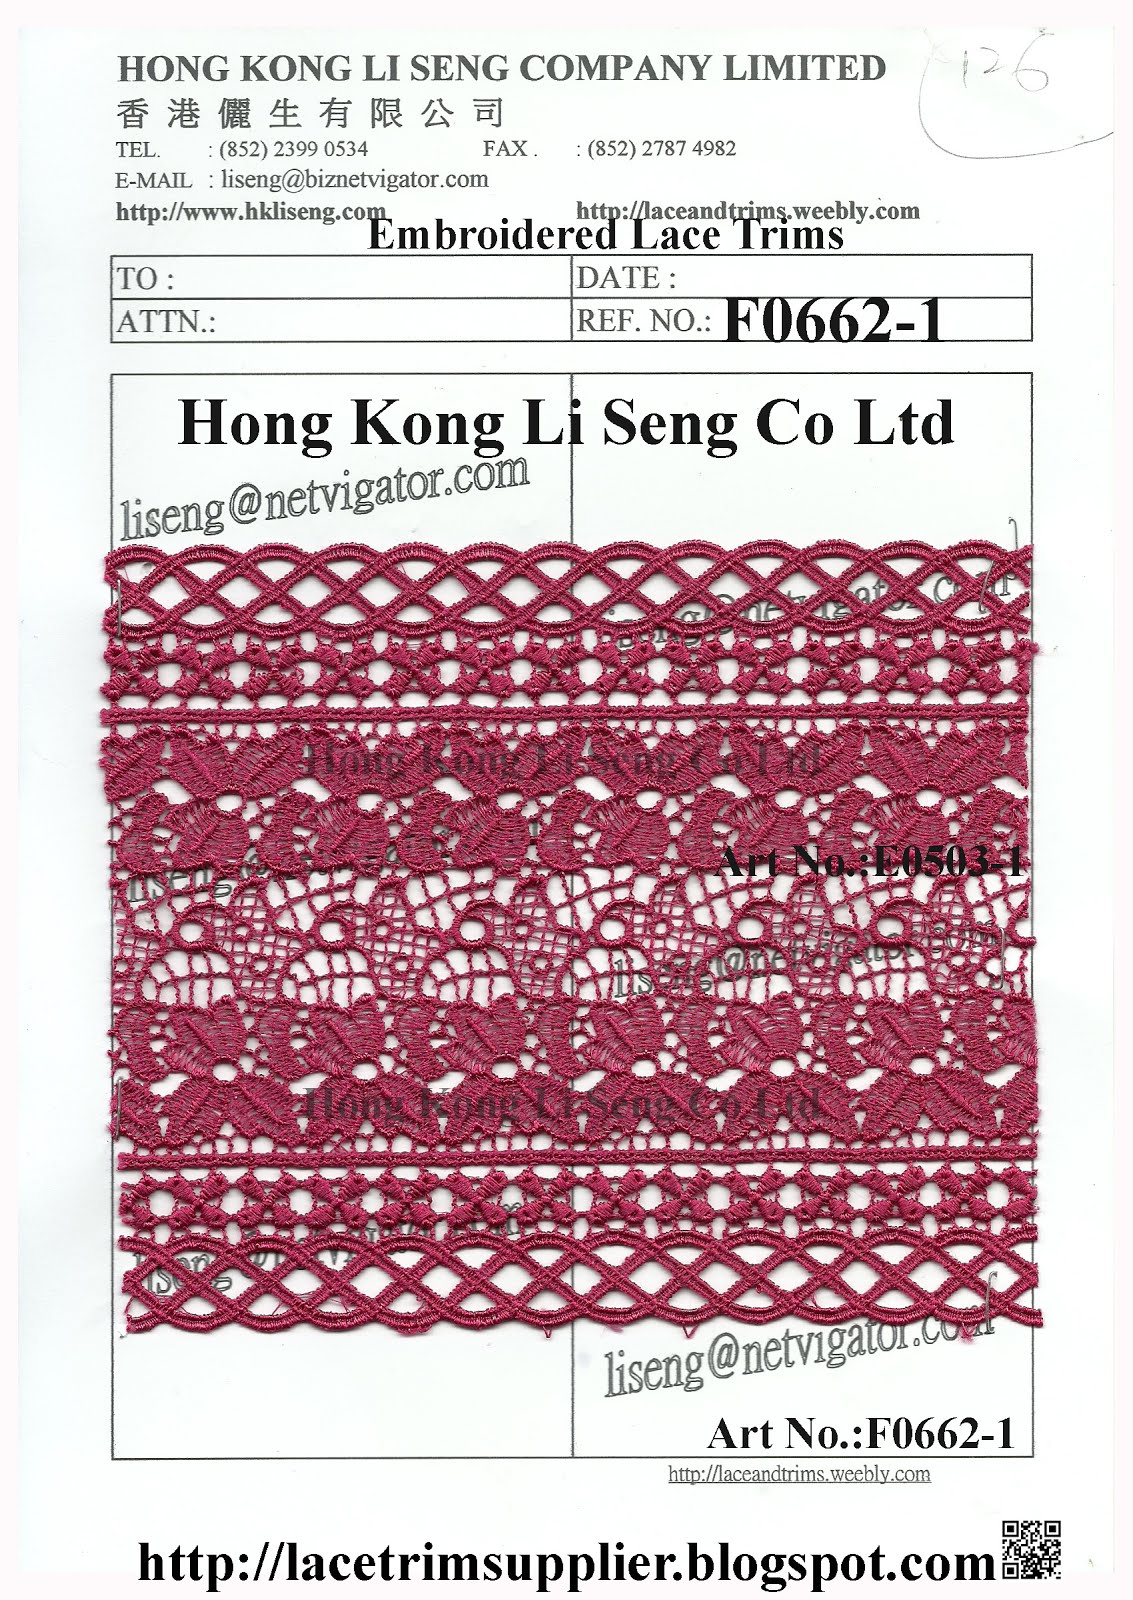 A. Stock Lot Lace Trims Supplier: Hong Kong Li Seng Co Ltd